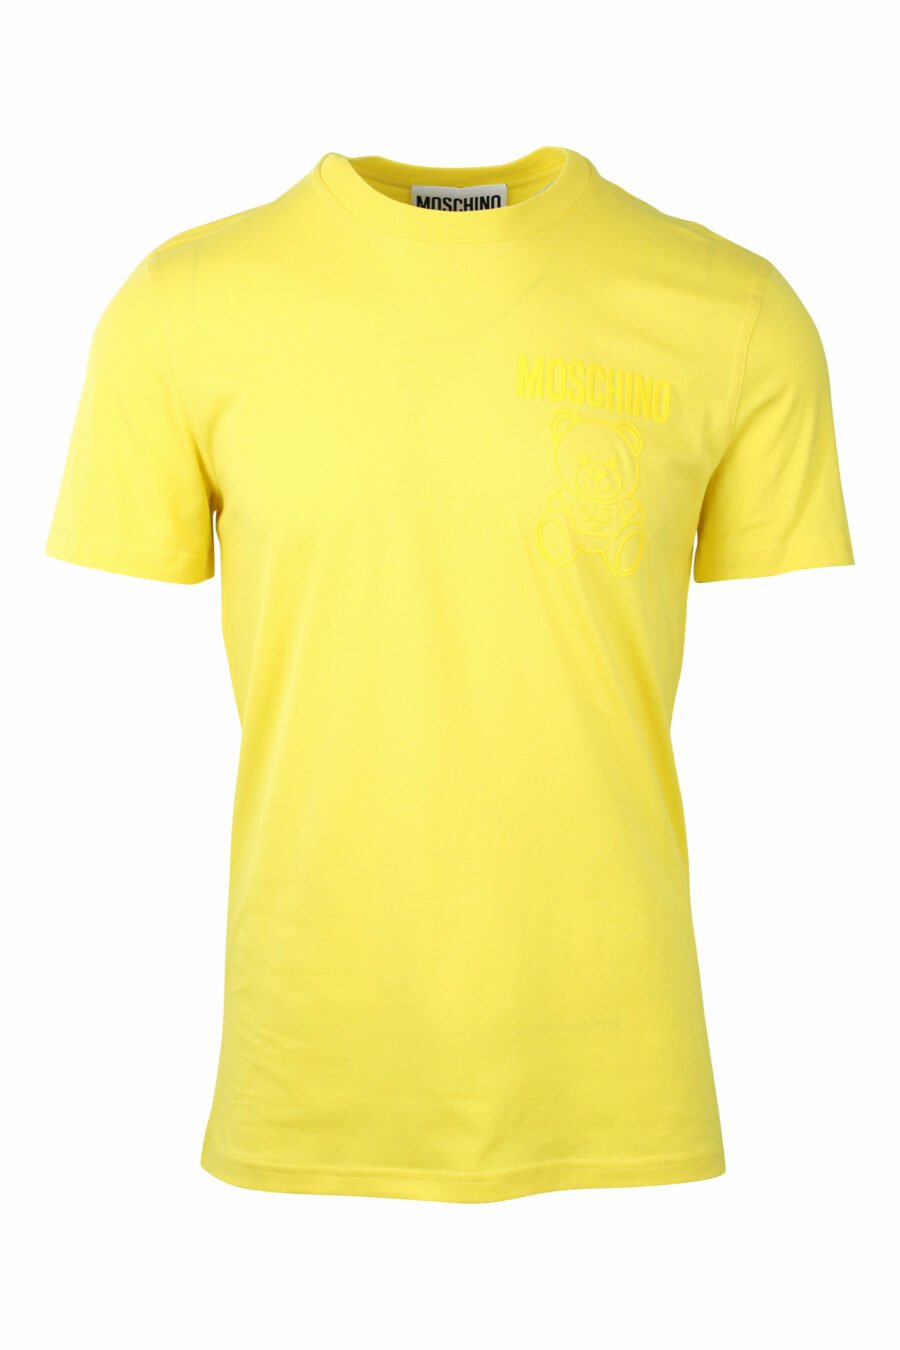 Camiseta amarilla con minilogo oso monocromático - IMG 1412